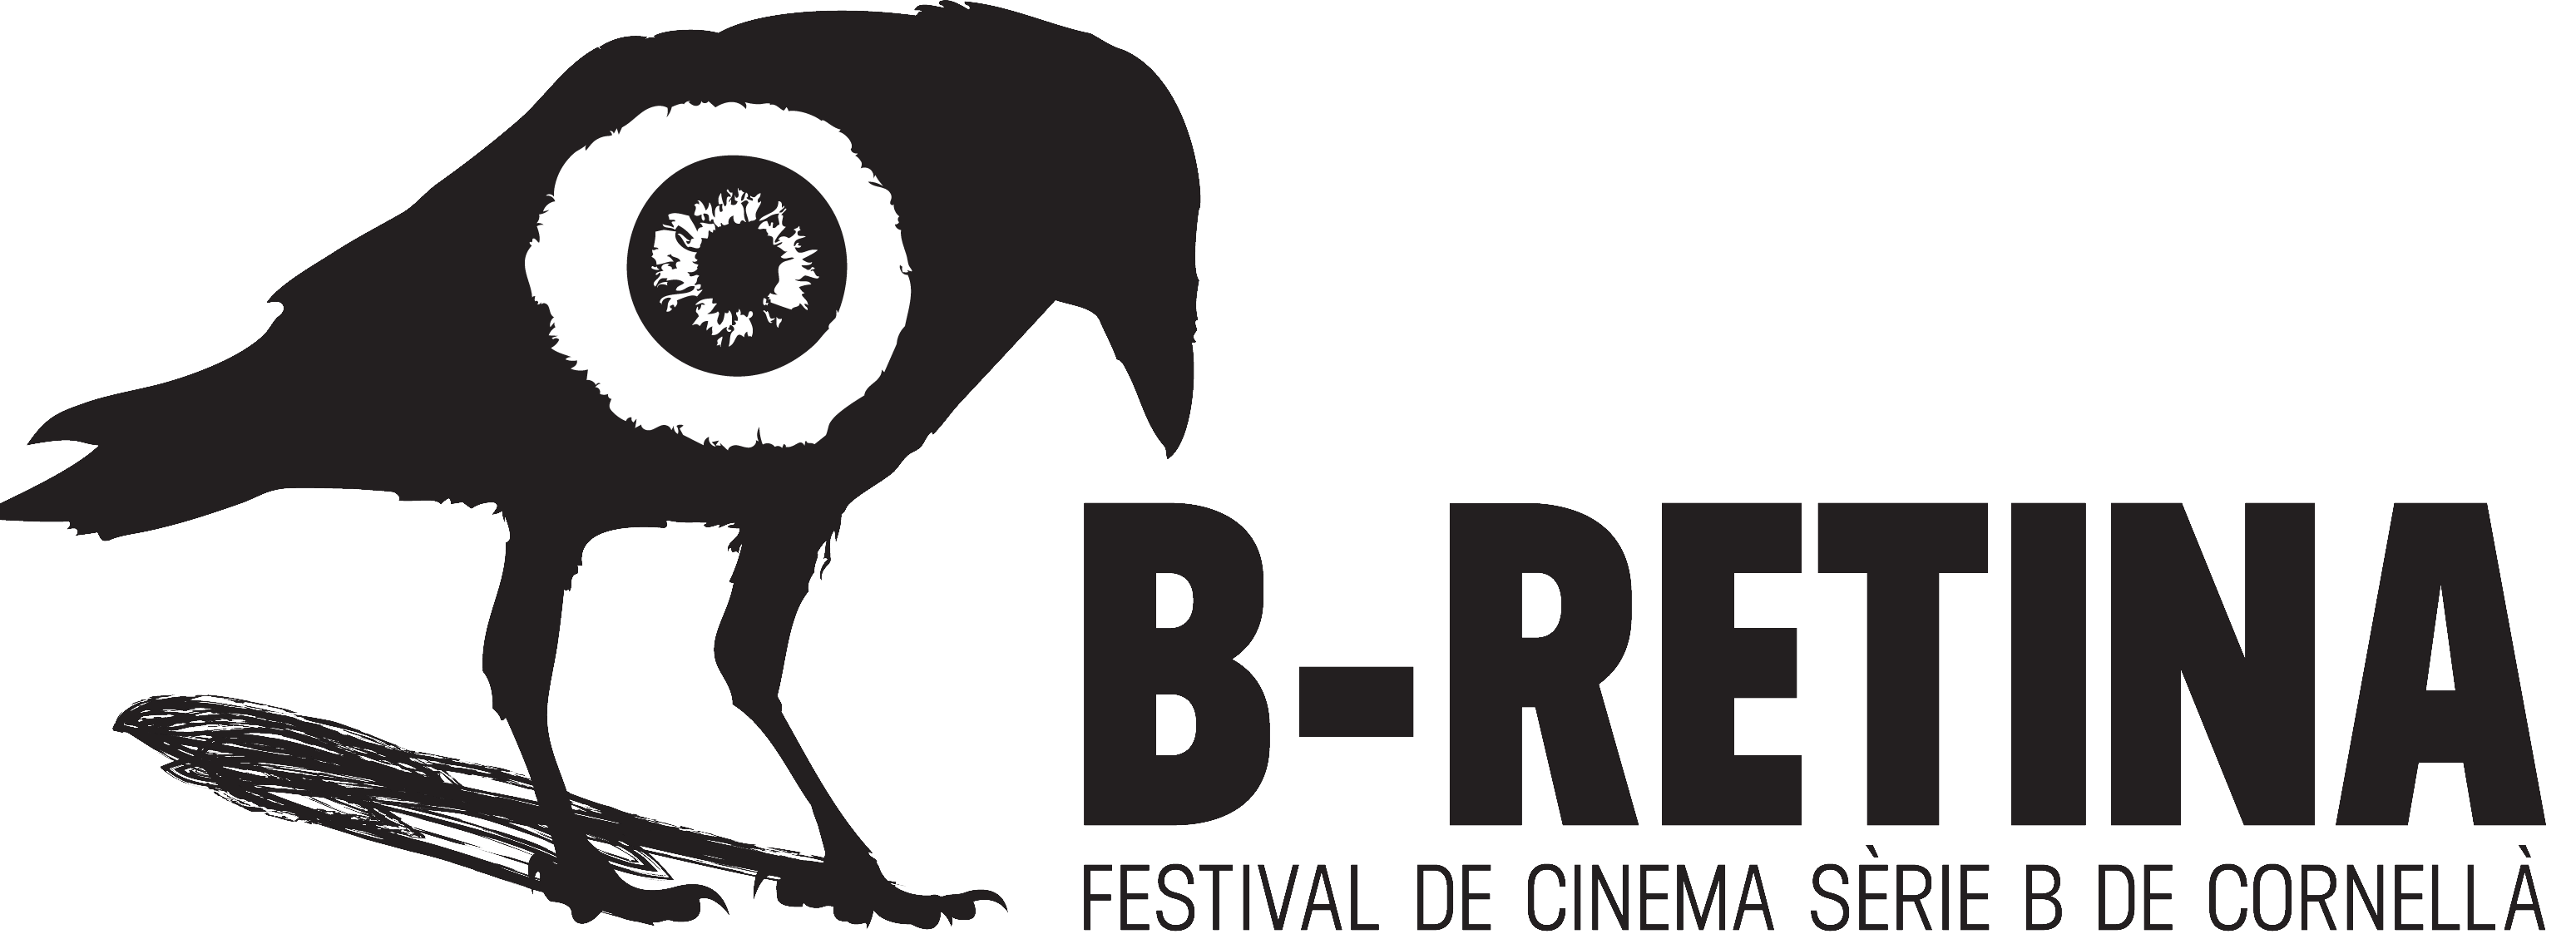 B-RETINA 2019 Festival de Sèrie B de Cornella (Noticias)